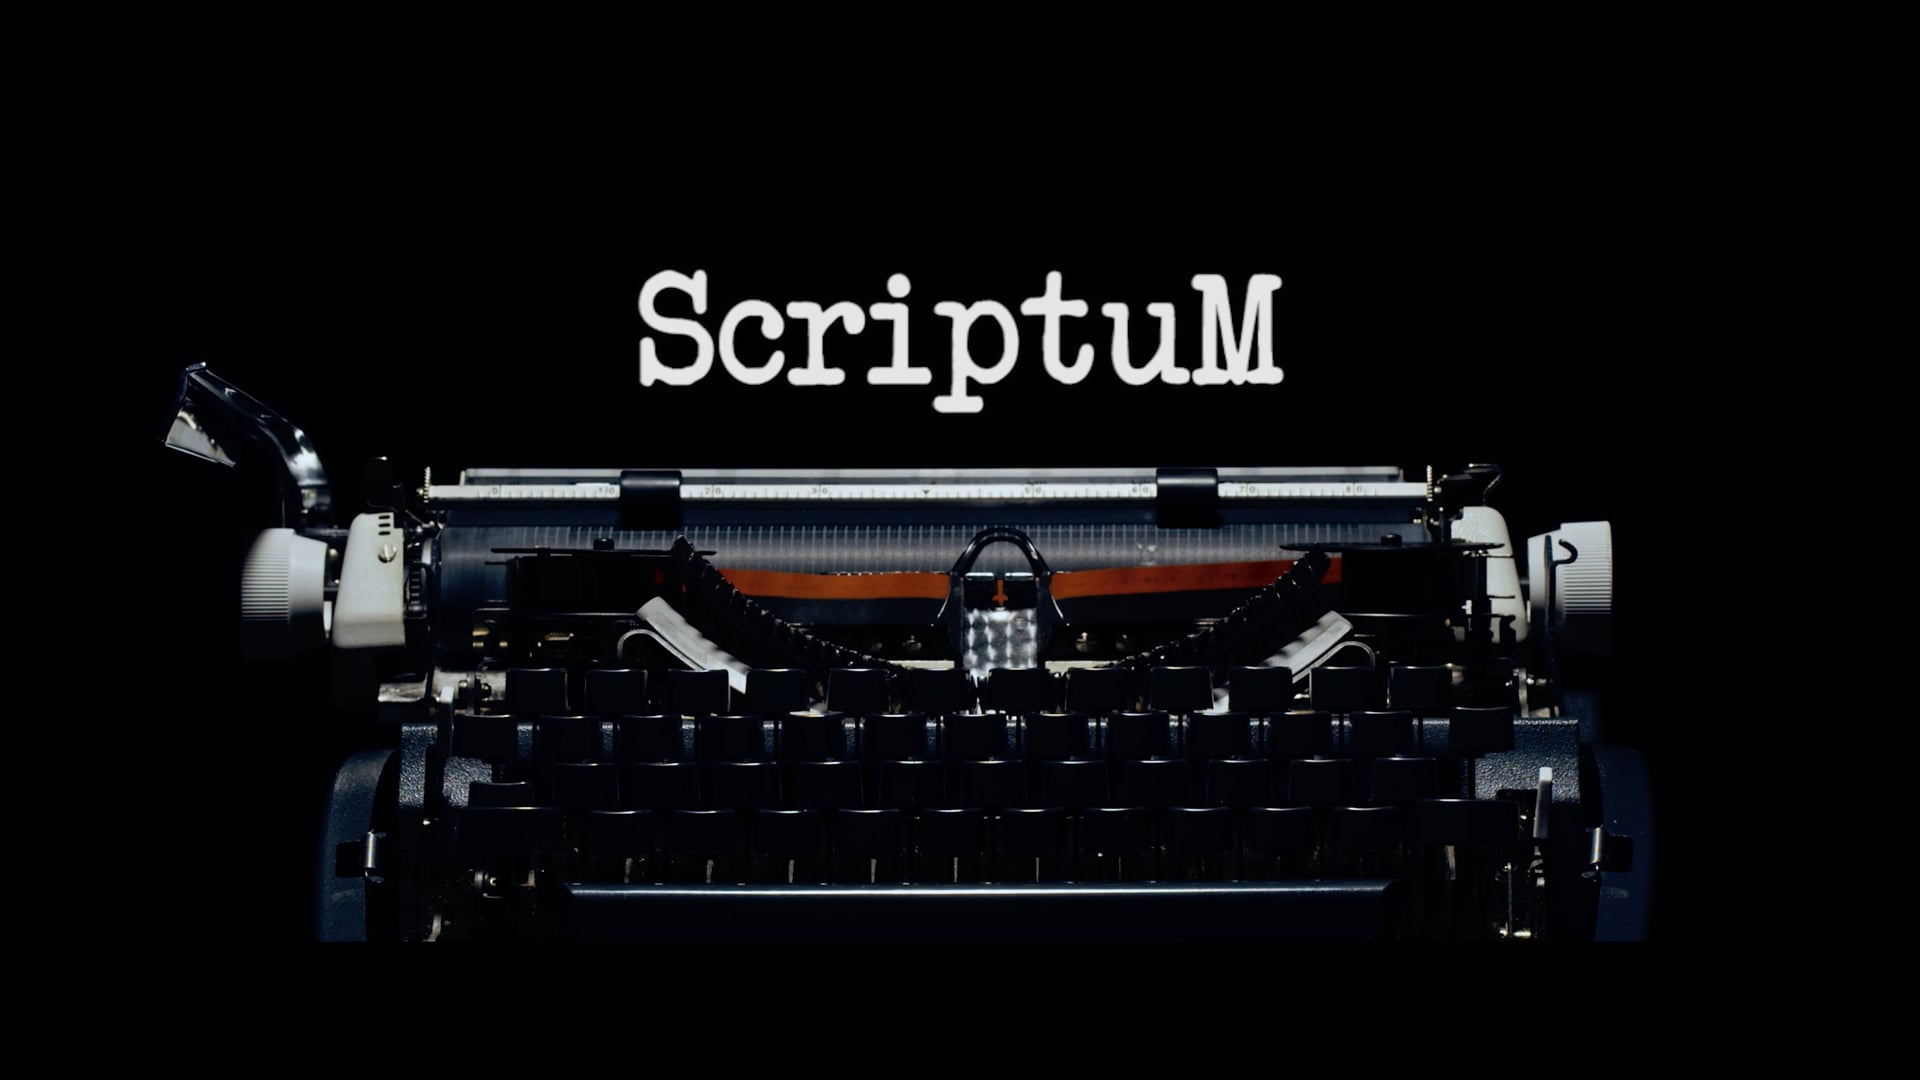 TRAILER - "Scriptum" (Marco Leonato, 2021) - English subtitles